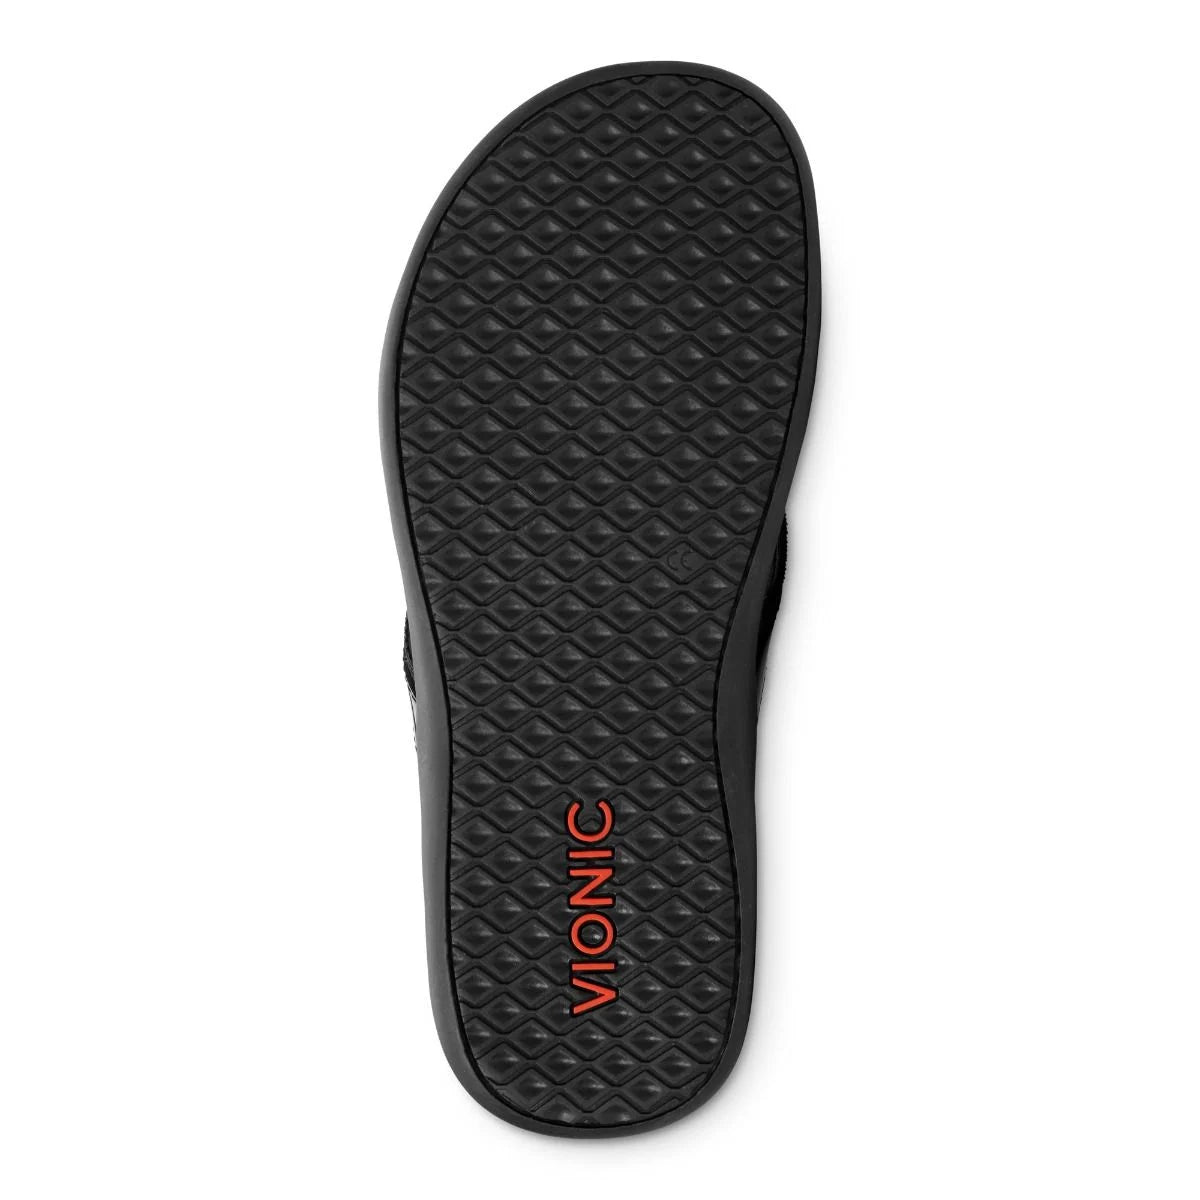 Vionic Women's Tide II Toe Post Sandal - Black